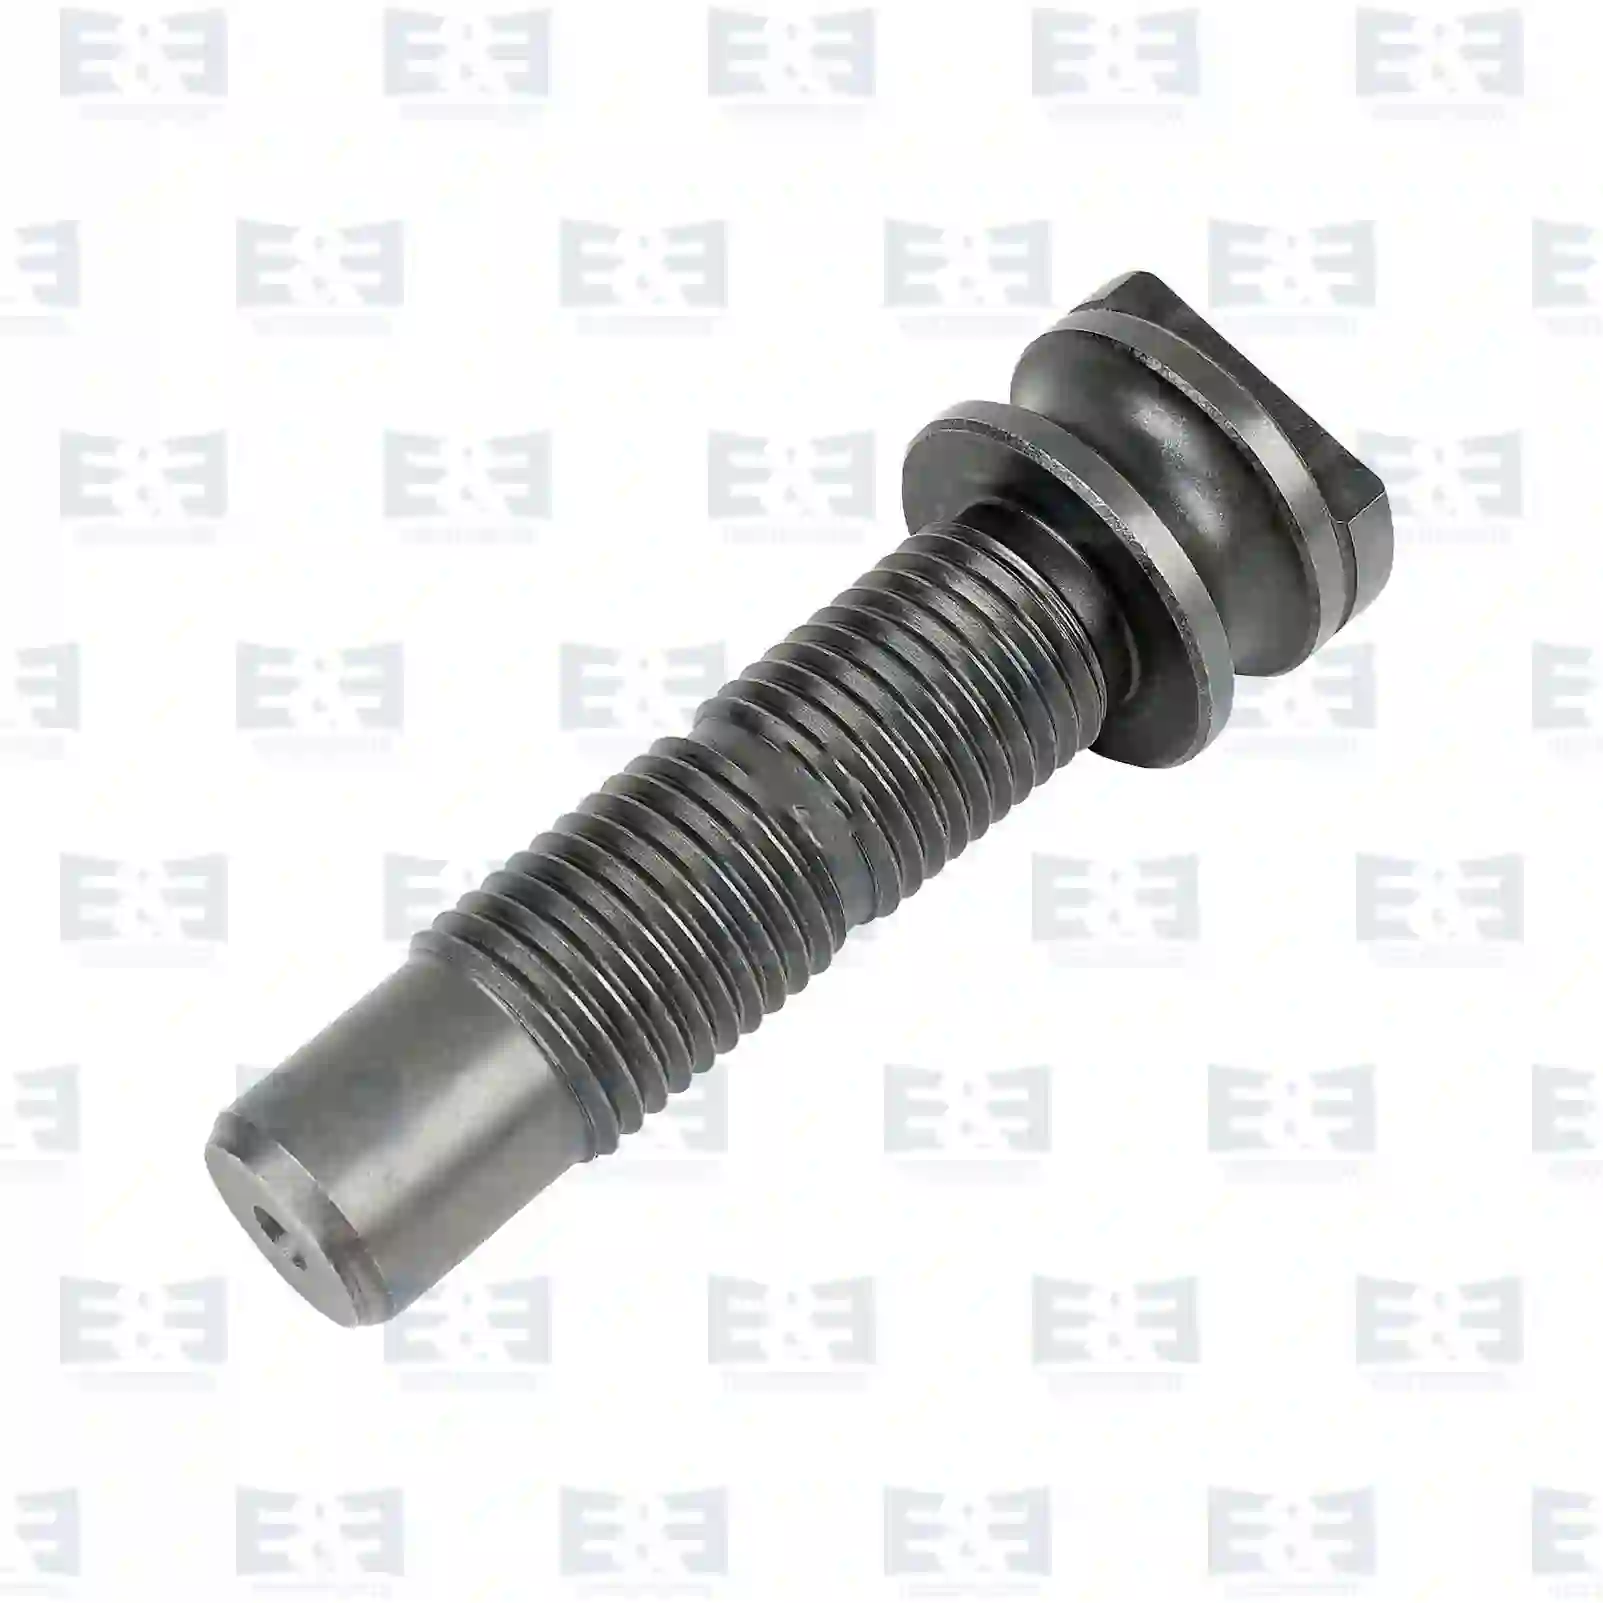  Spring bolt || E&E Truck Spare Parts | Truck Spare Parts, Auotomotive Spare Parts